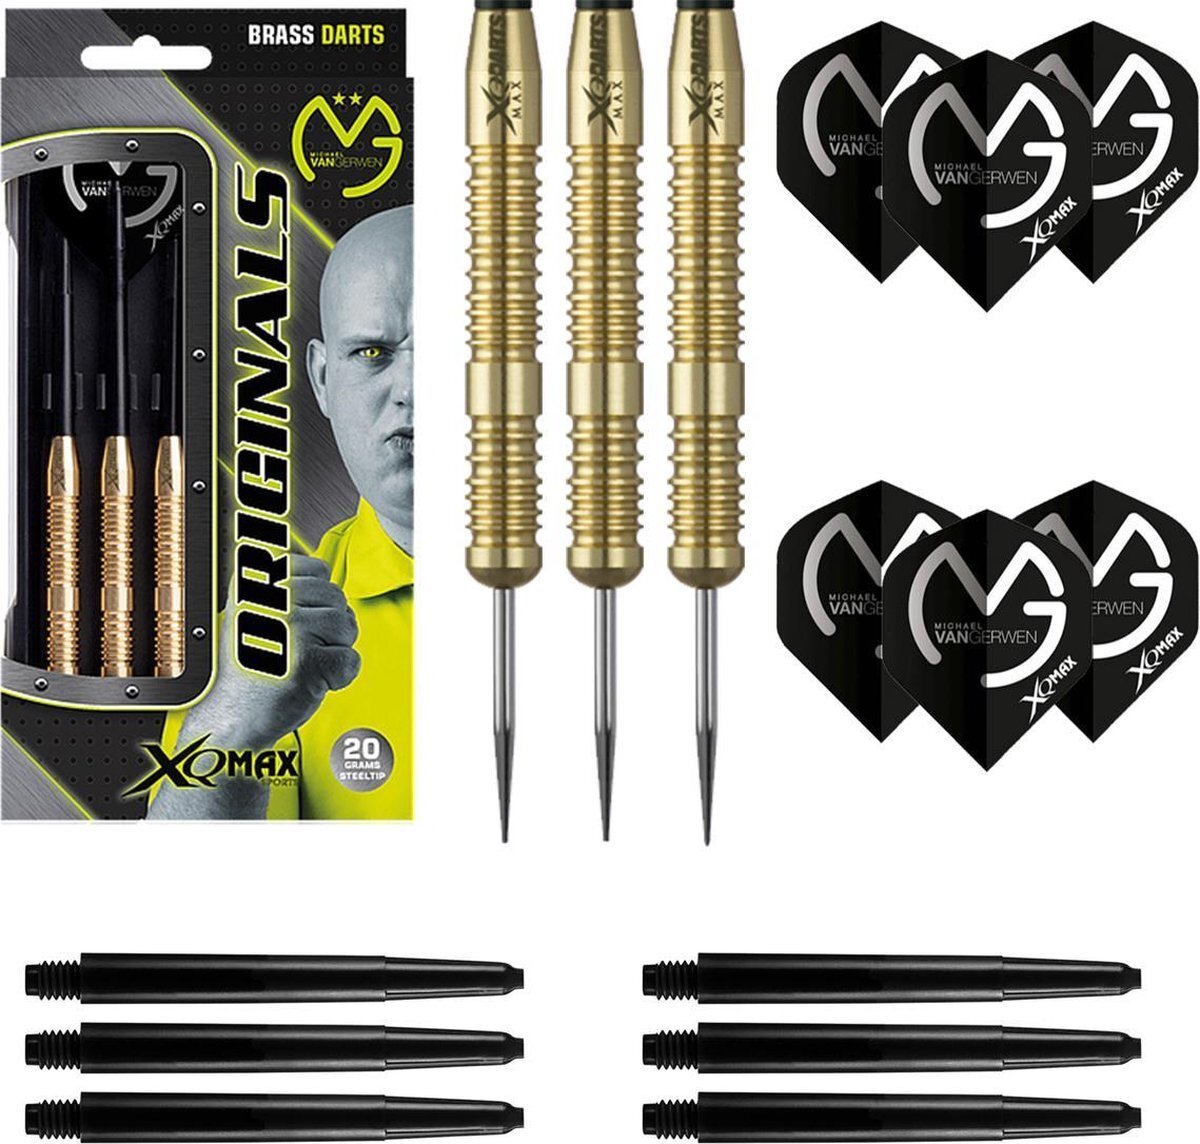 Dragon Darts Michael van Gerwen - 100% brass - 23 gram - dartpijlen - 9 dart shafts + 9 dart flights